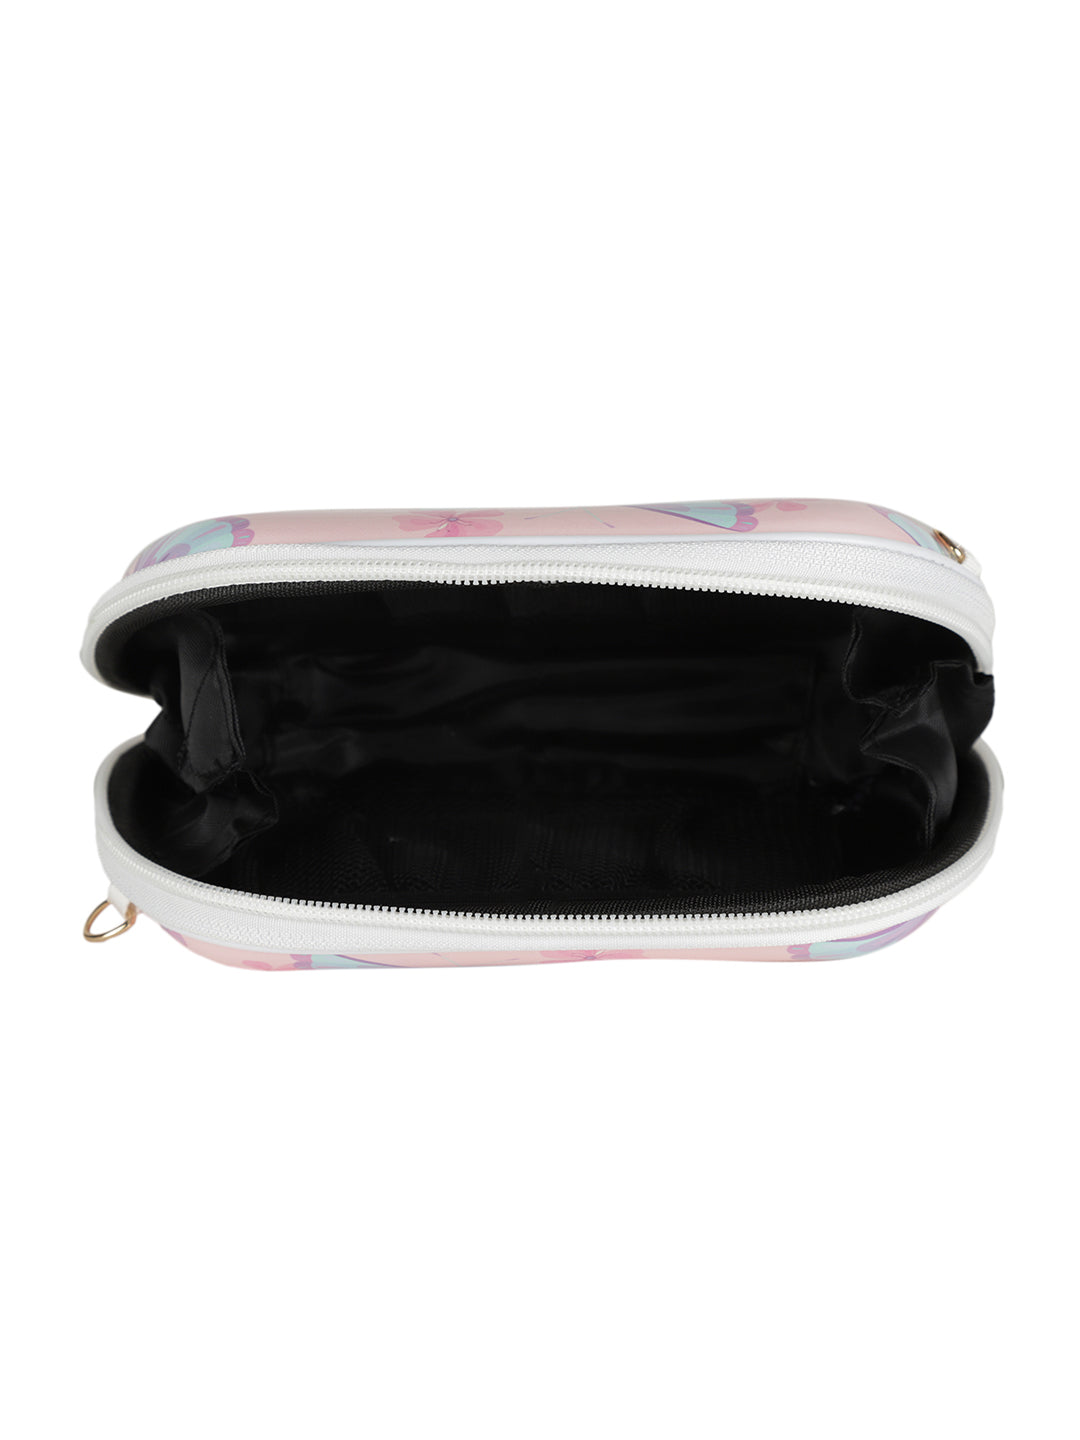 MINI WESST Pink Casual Solid Sling Bag(MWHB187PR)